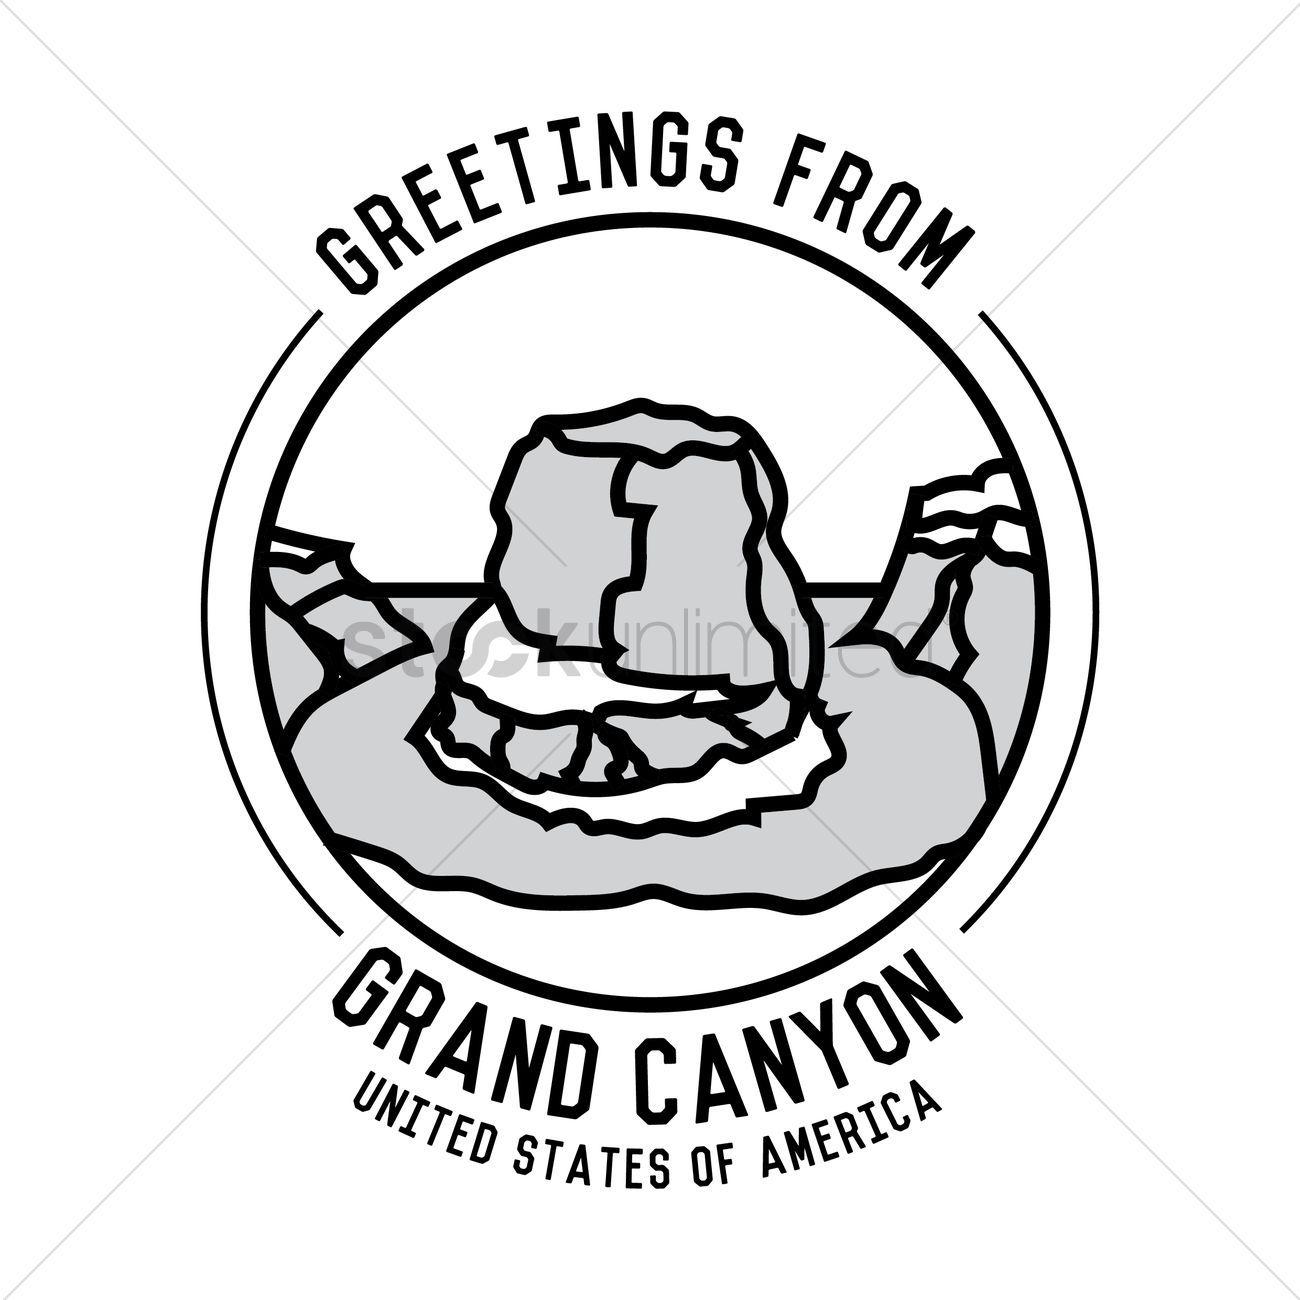 Grand Canyon State Logo - Grand canyon Vector Image - 1623236 | StockUnlimited